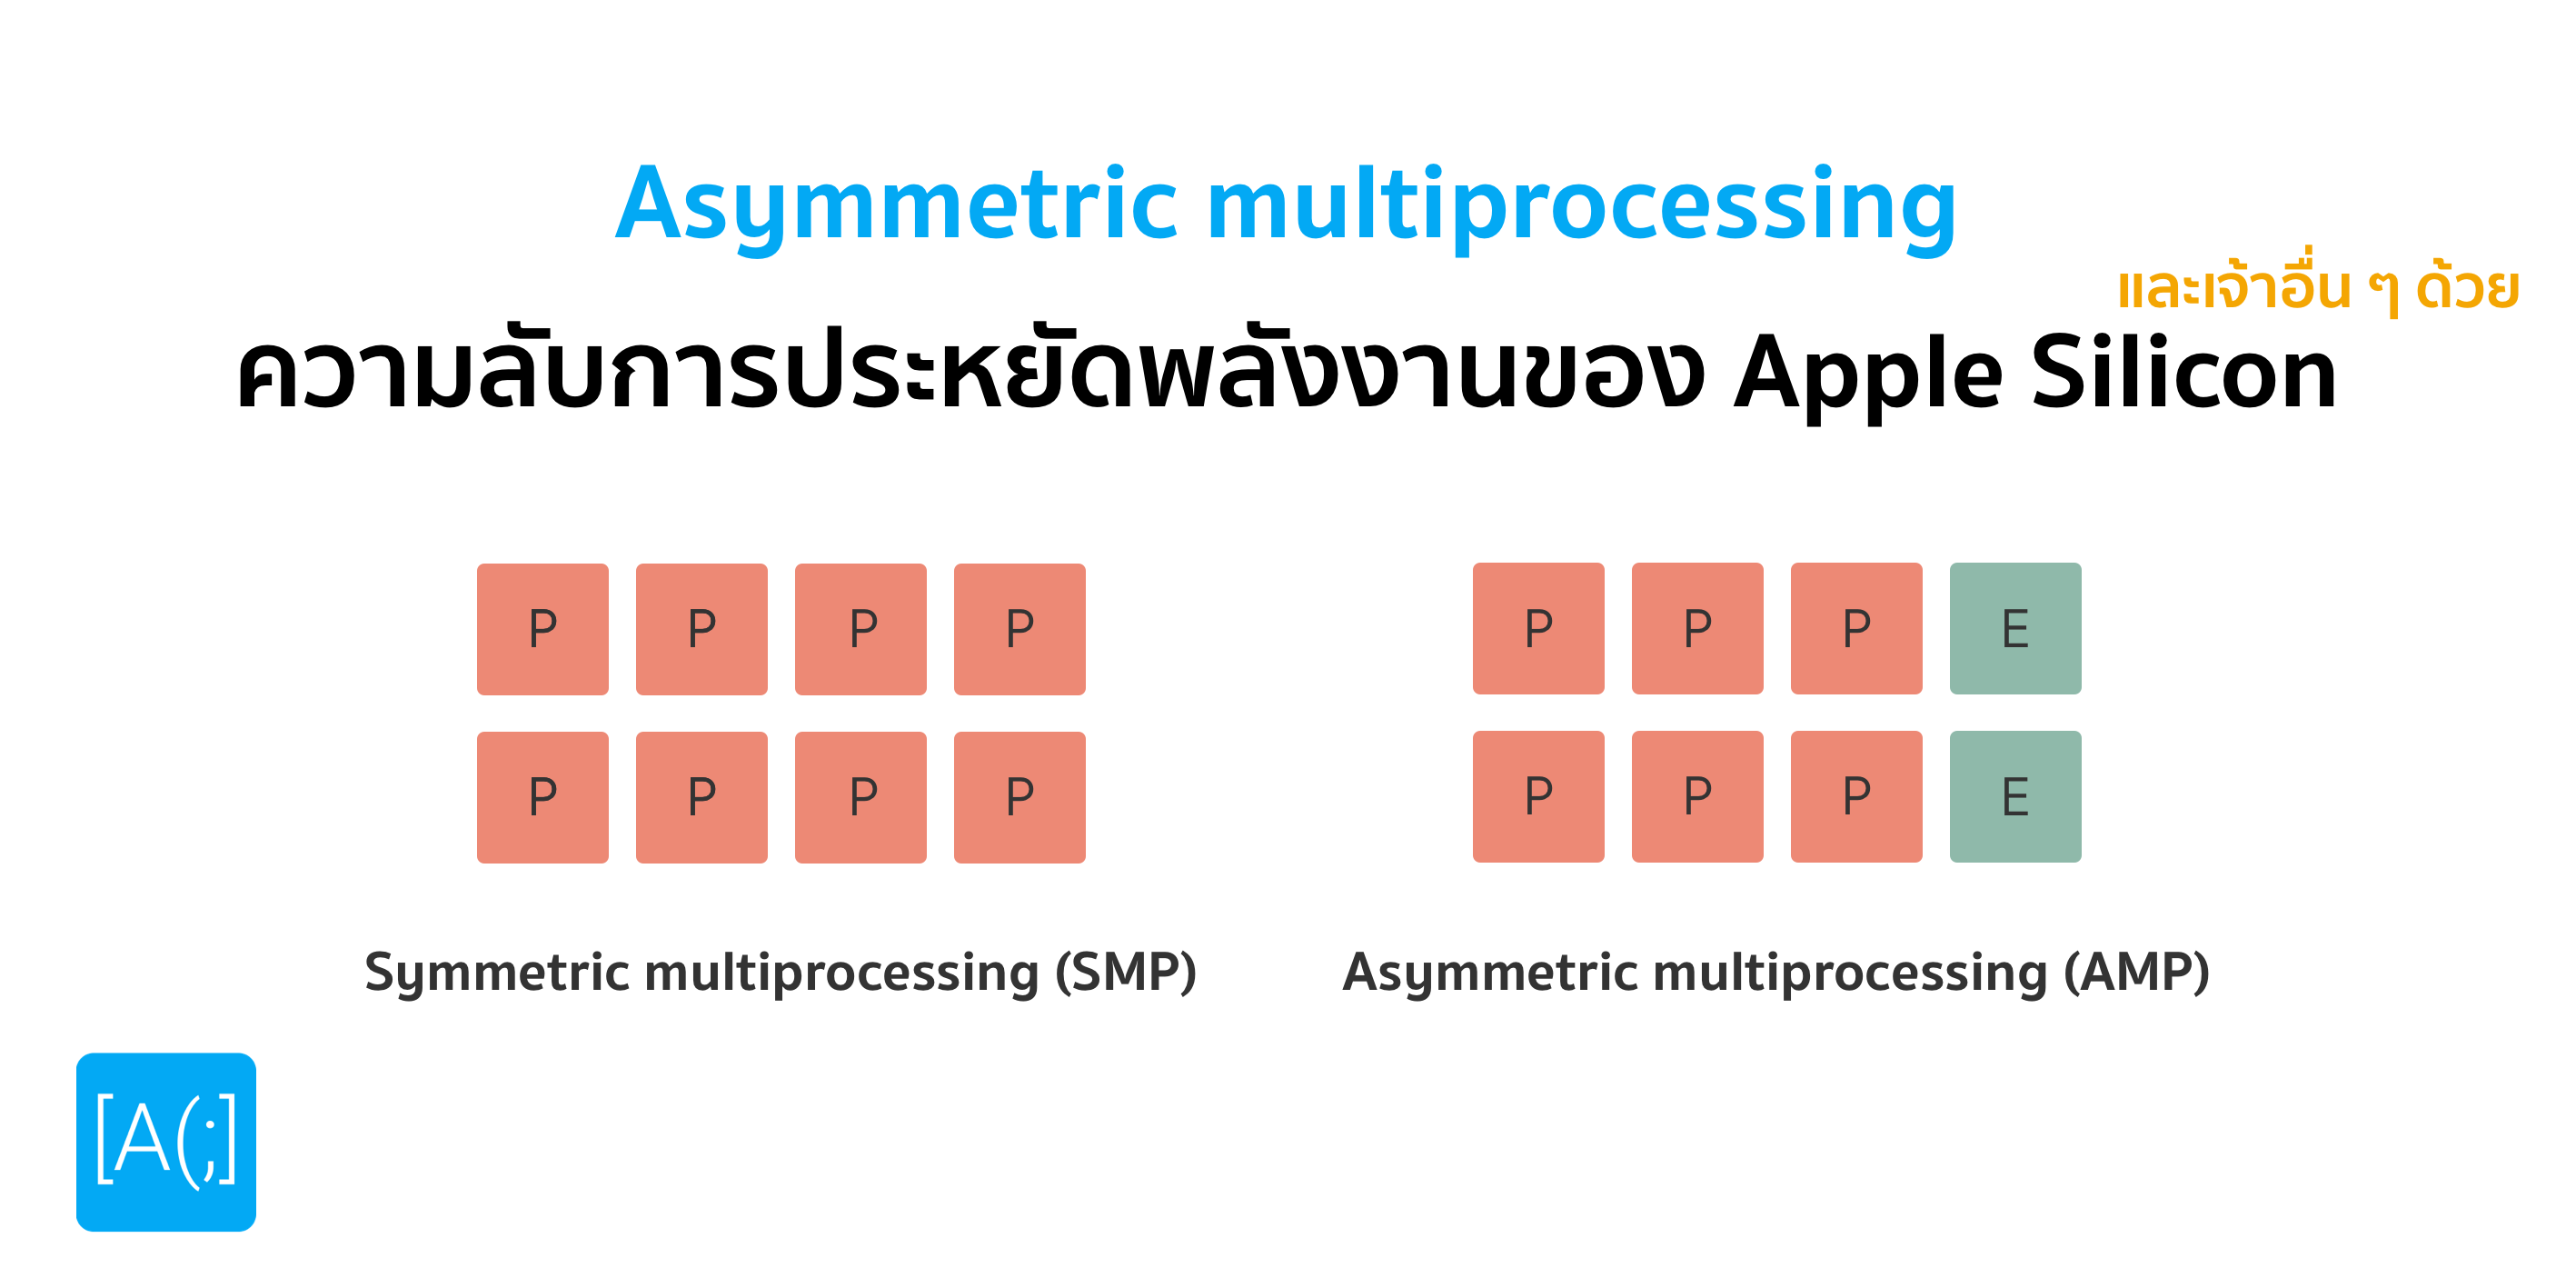 Asymmetric multiprocessing ความลับการประหยัดพลังงานของ Apple Silicon